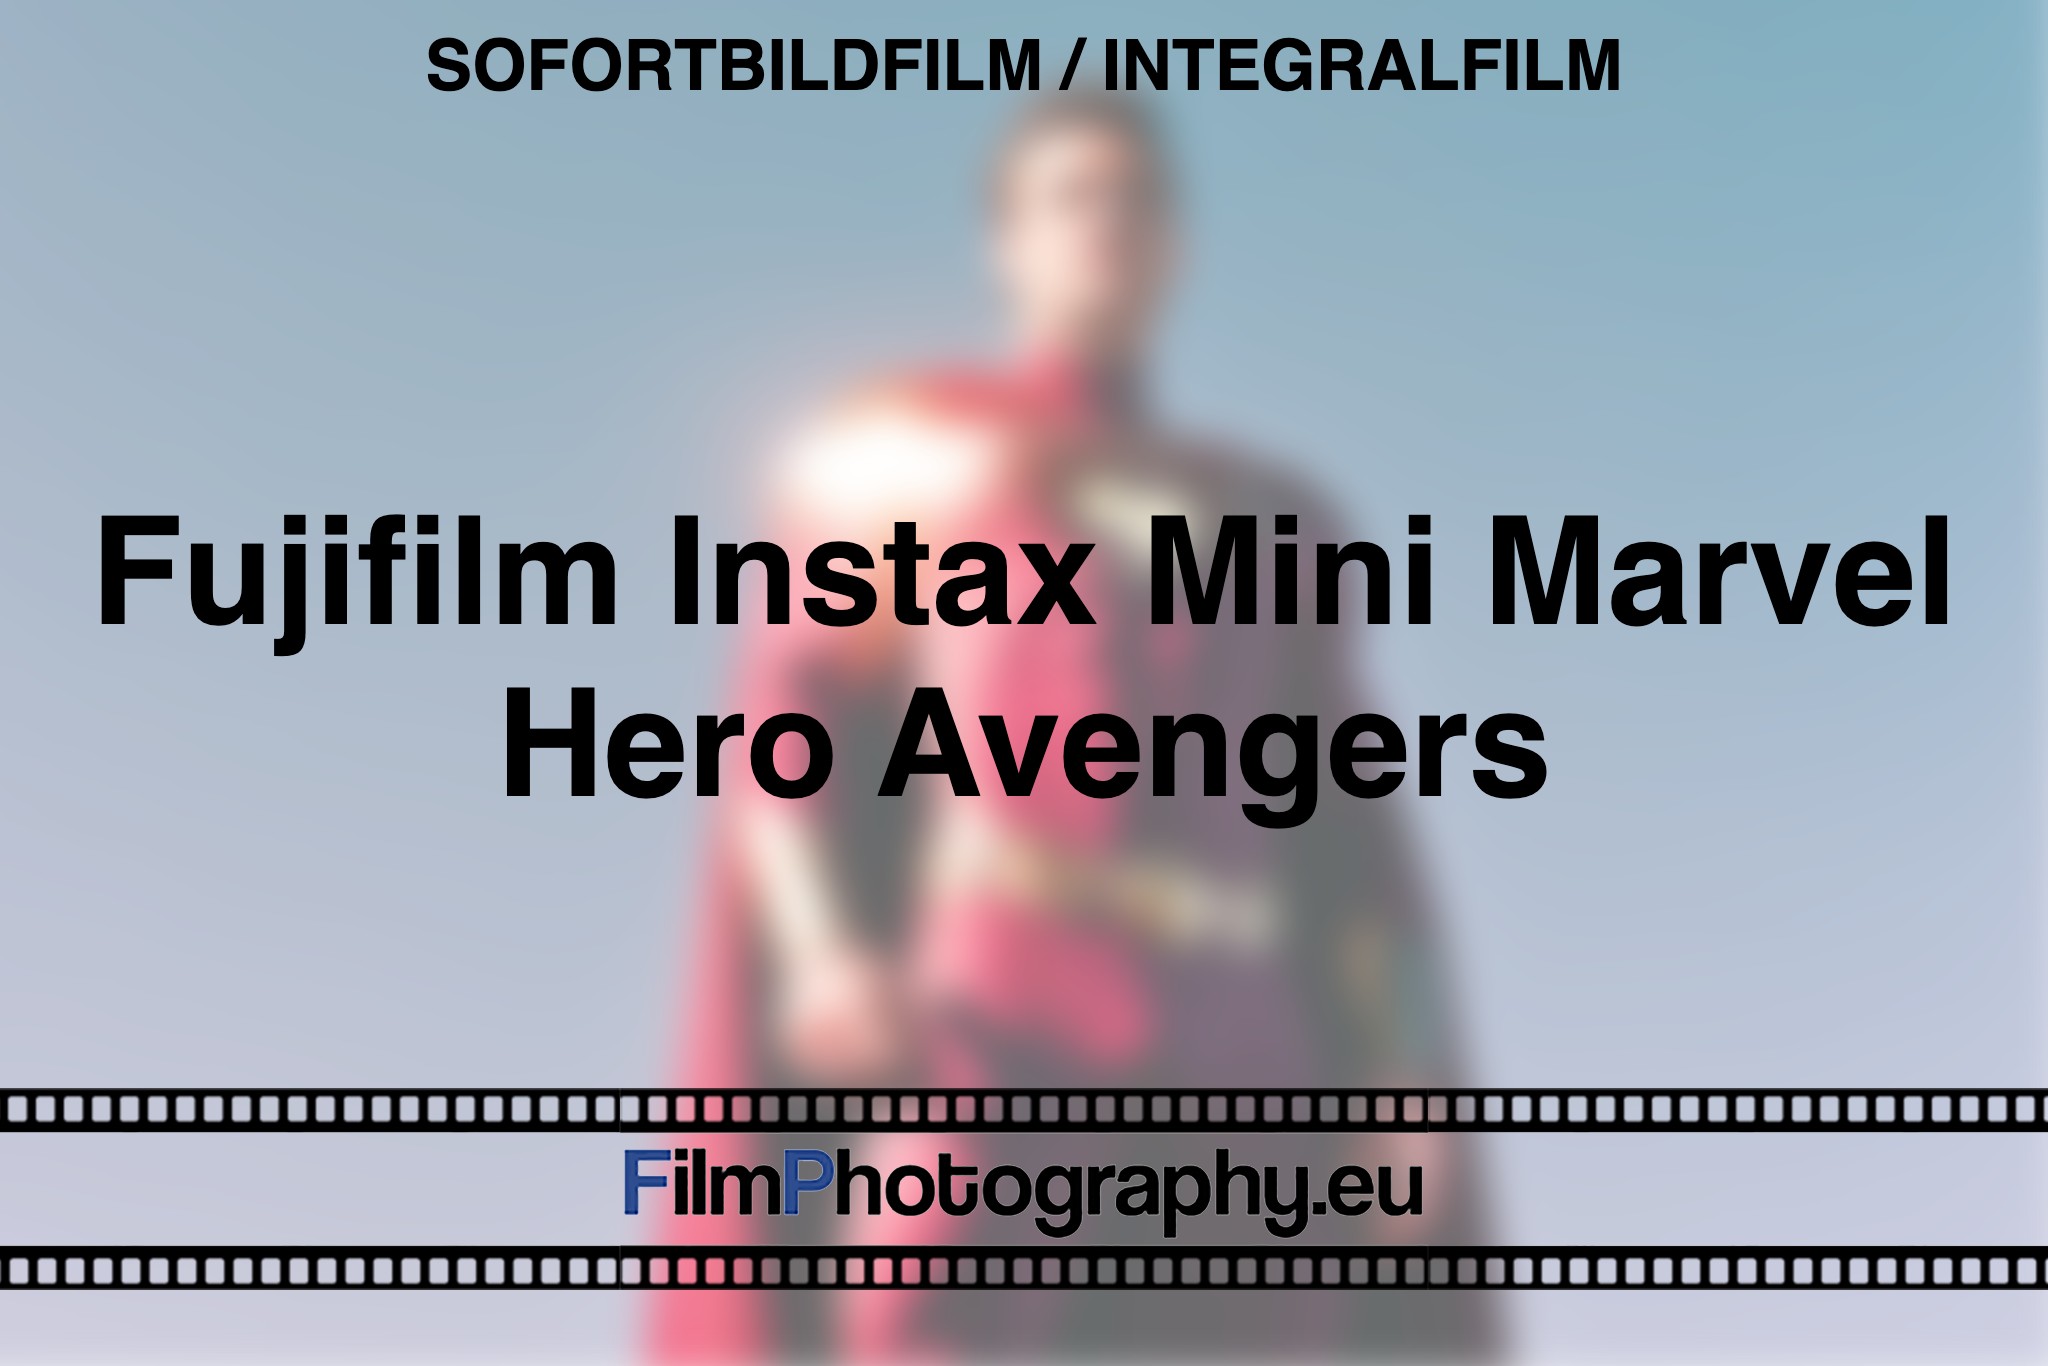 fujifilm-instax-mini-marvel-hero-avengers-sofortbildfilm-integralfilm-fp-bnv